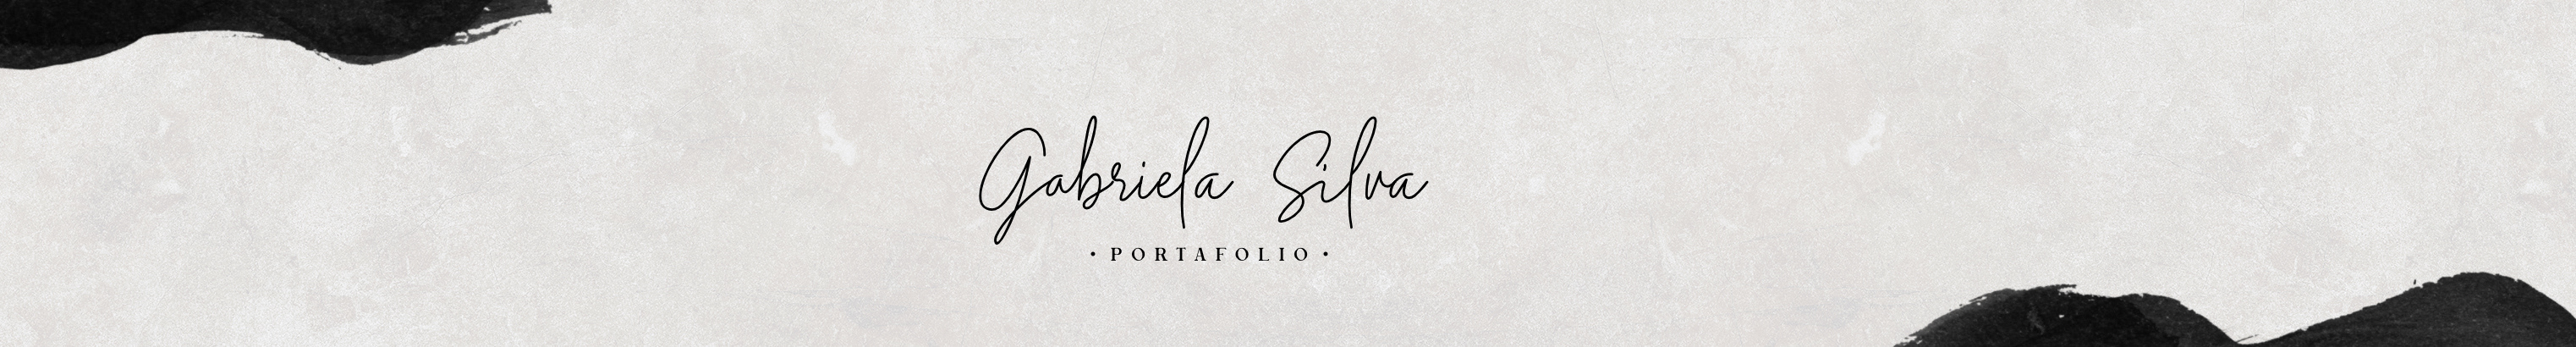 Gabriela Silva Villanueva's profile banner